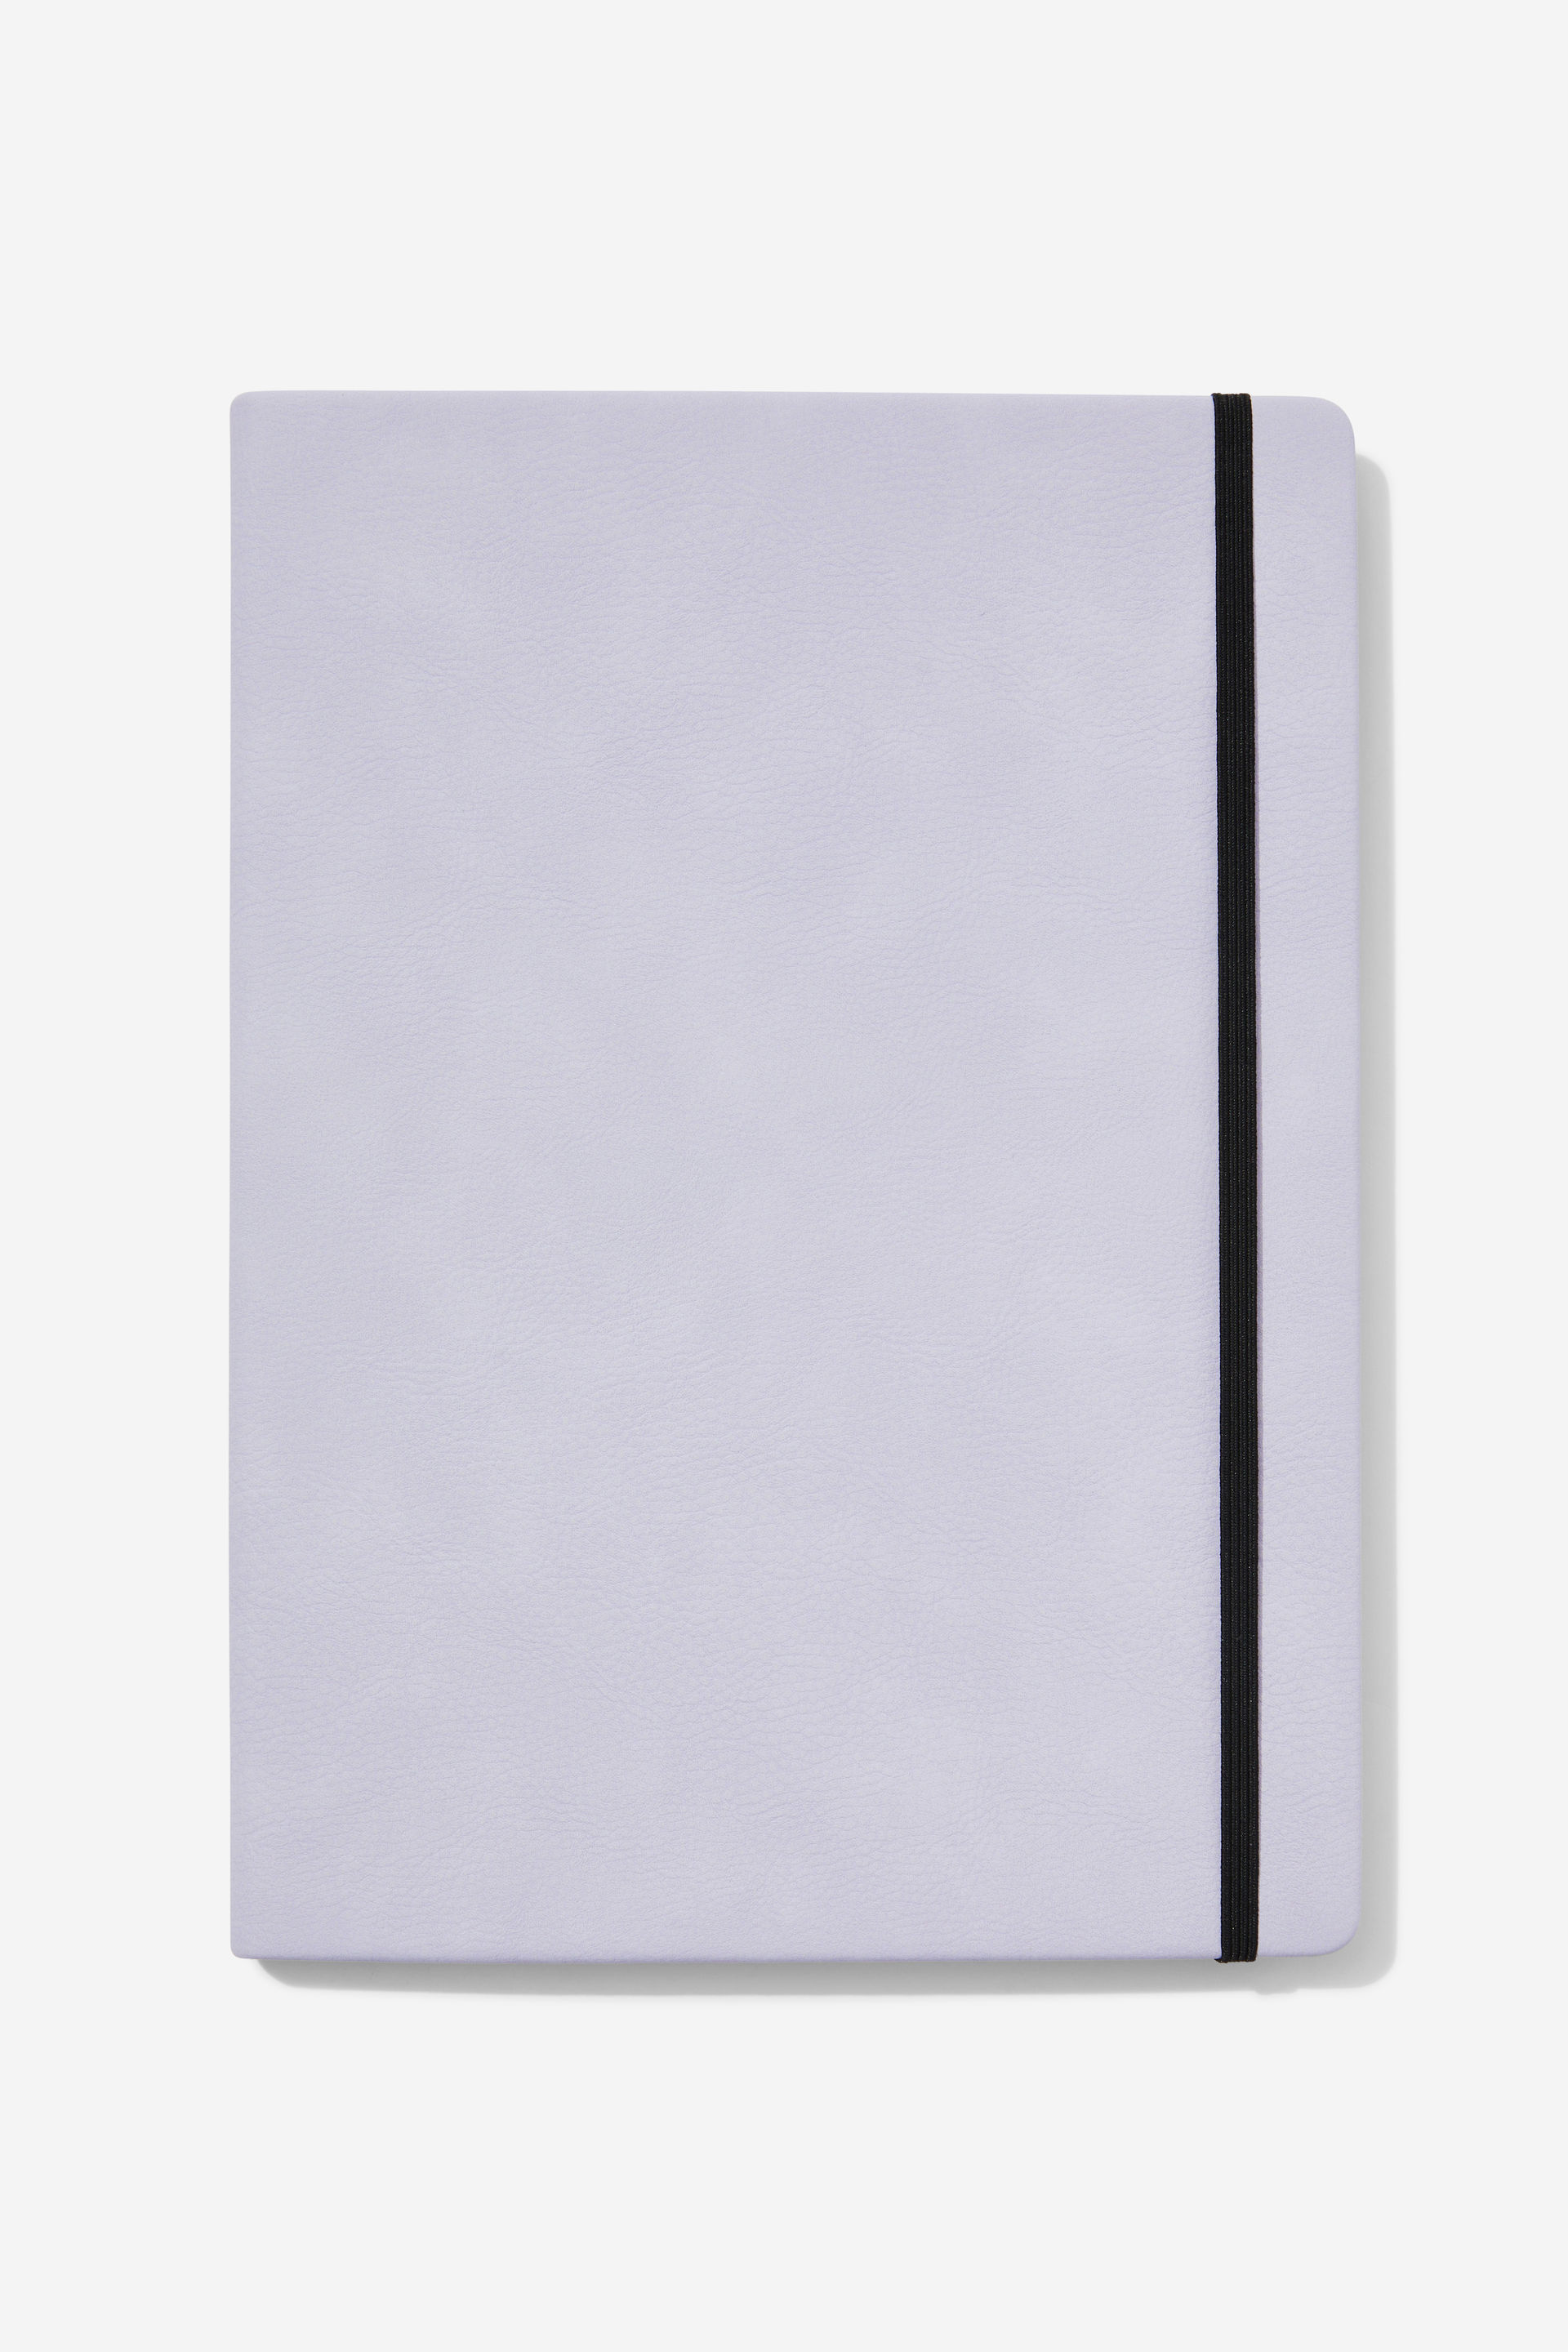 Typo - A4 Buffalo Journal - Soft lilac